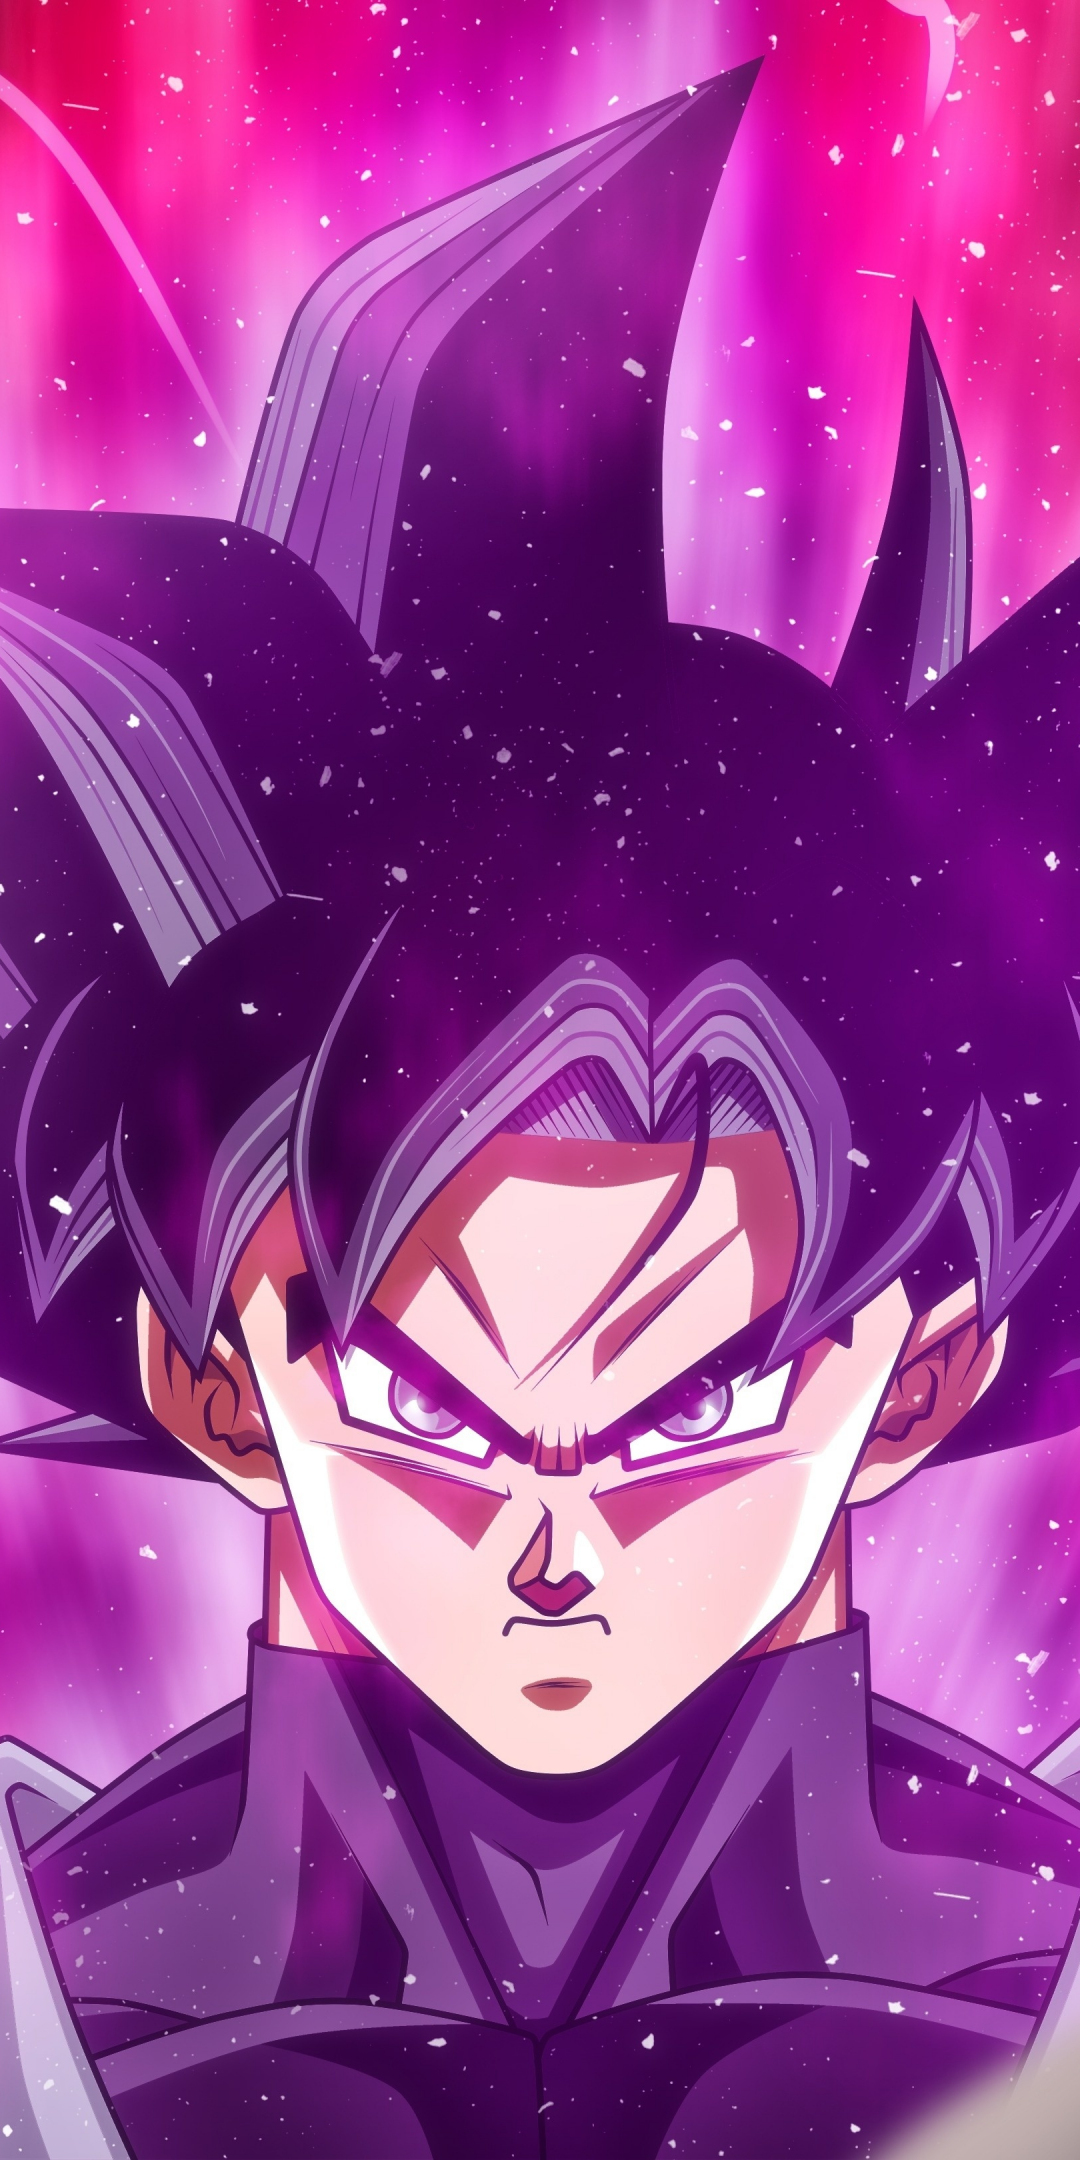 Goku black, dragon ball super, attitude, 1080x2160 wallpaper